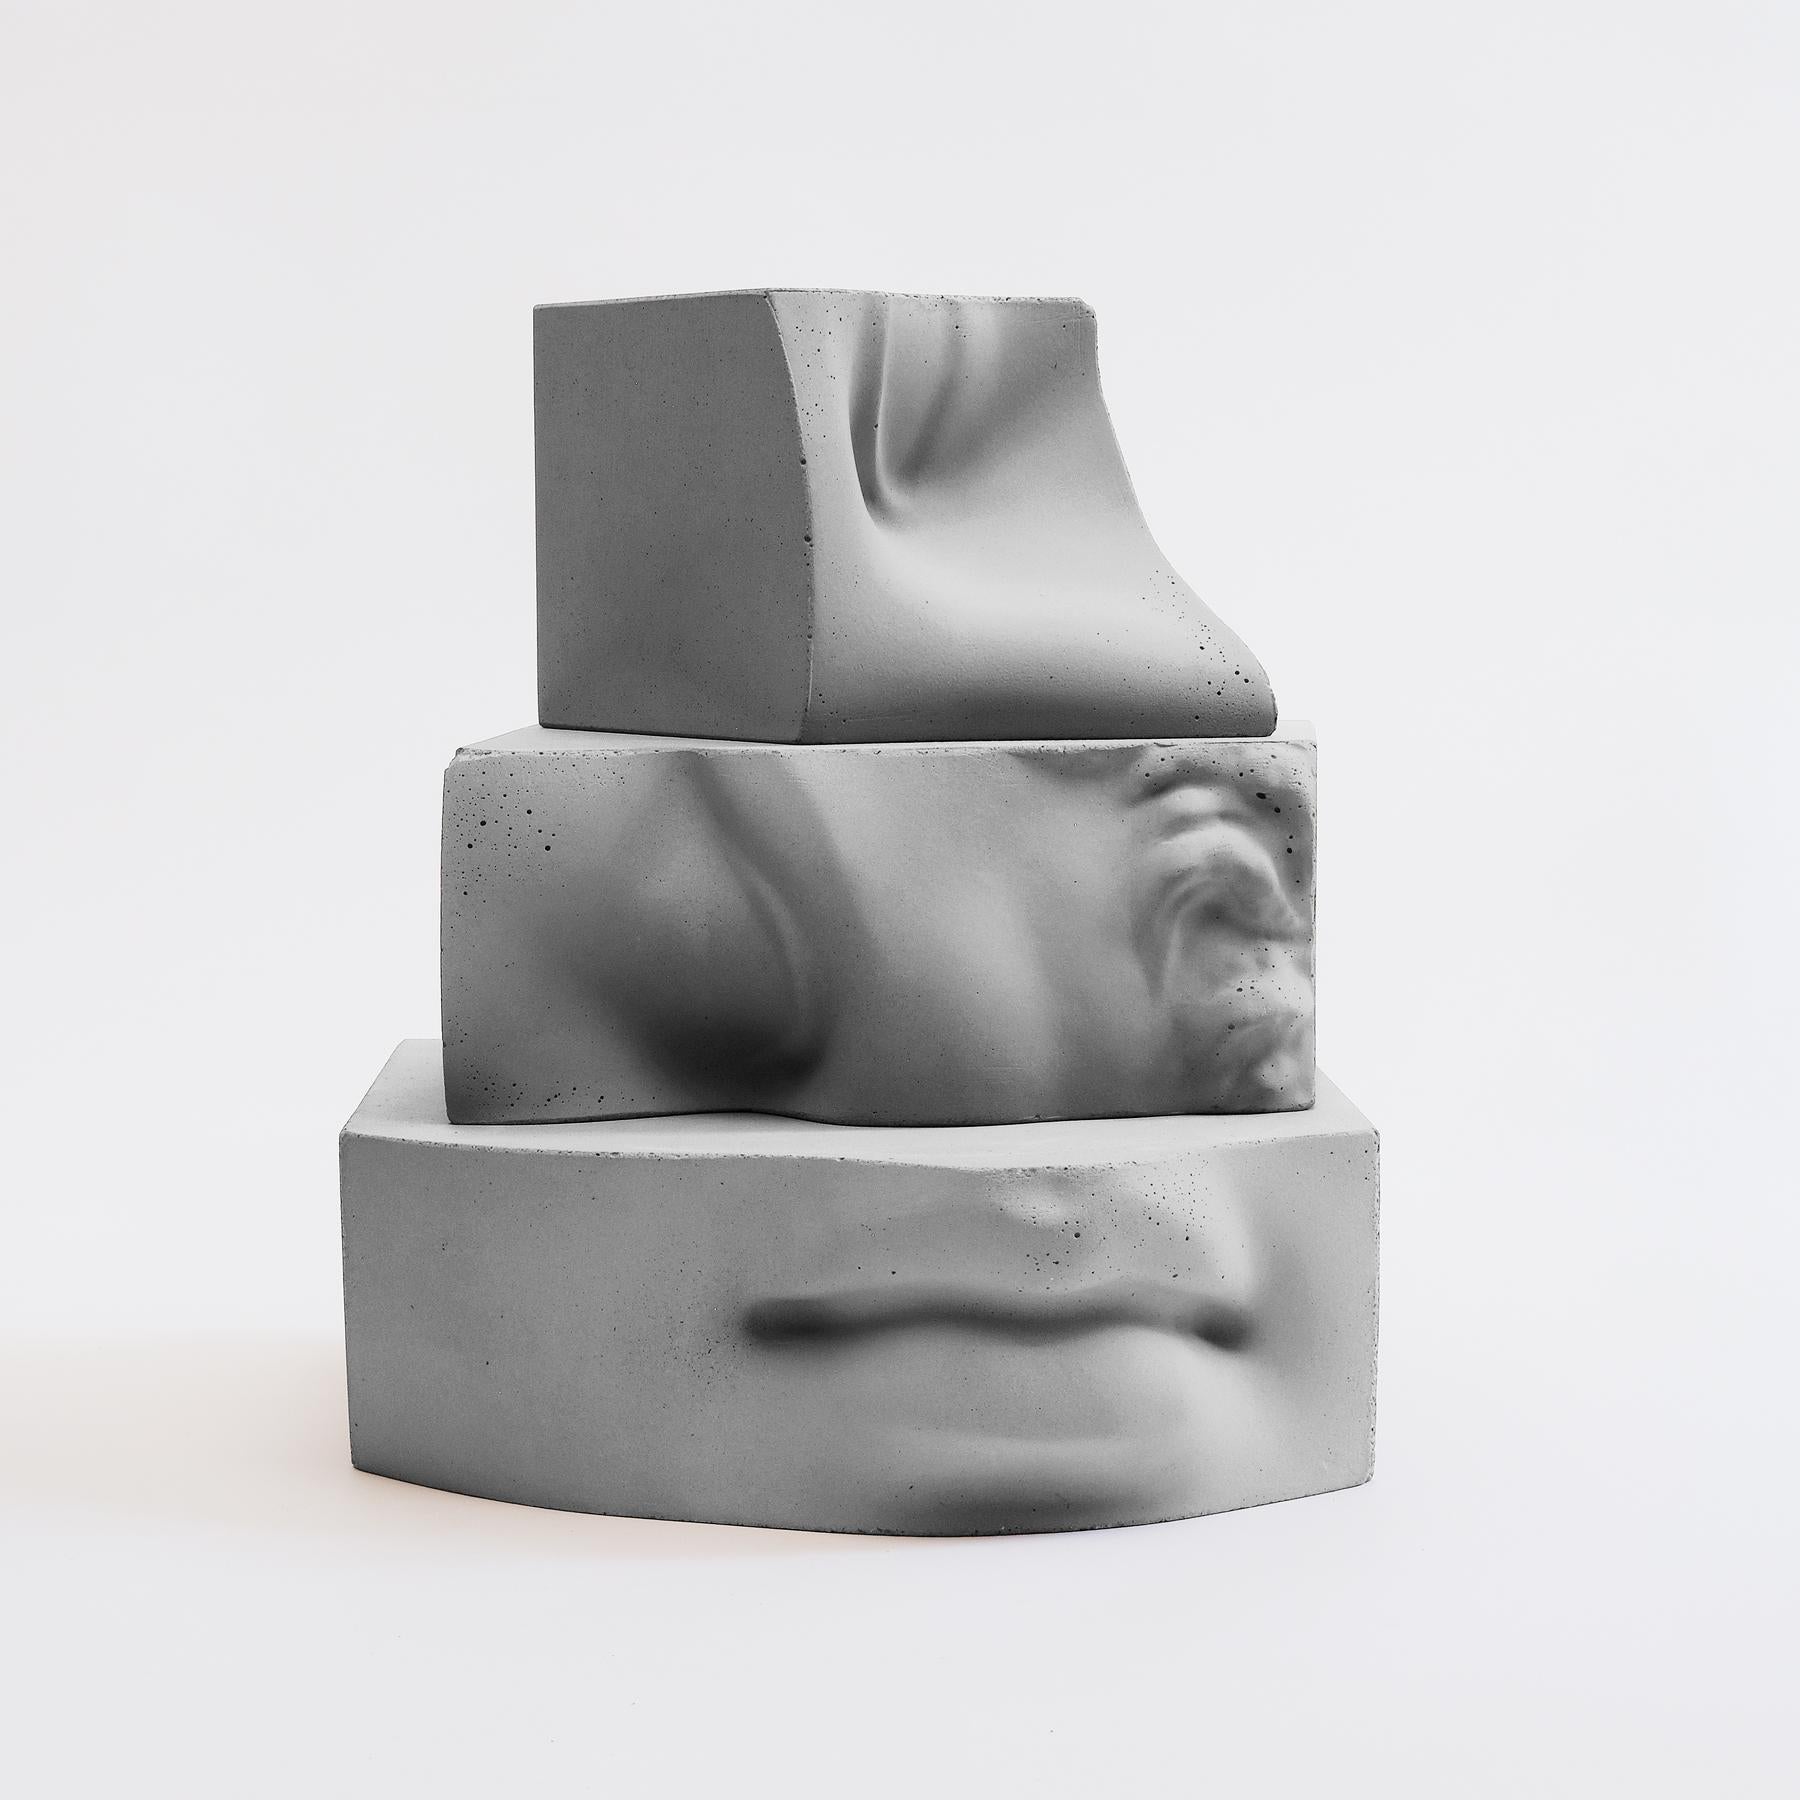 Hermes - Natural Concrete - Design Sculpture Paolo Giordano Classic Cement Cast For Sale 1